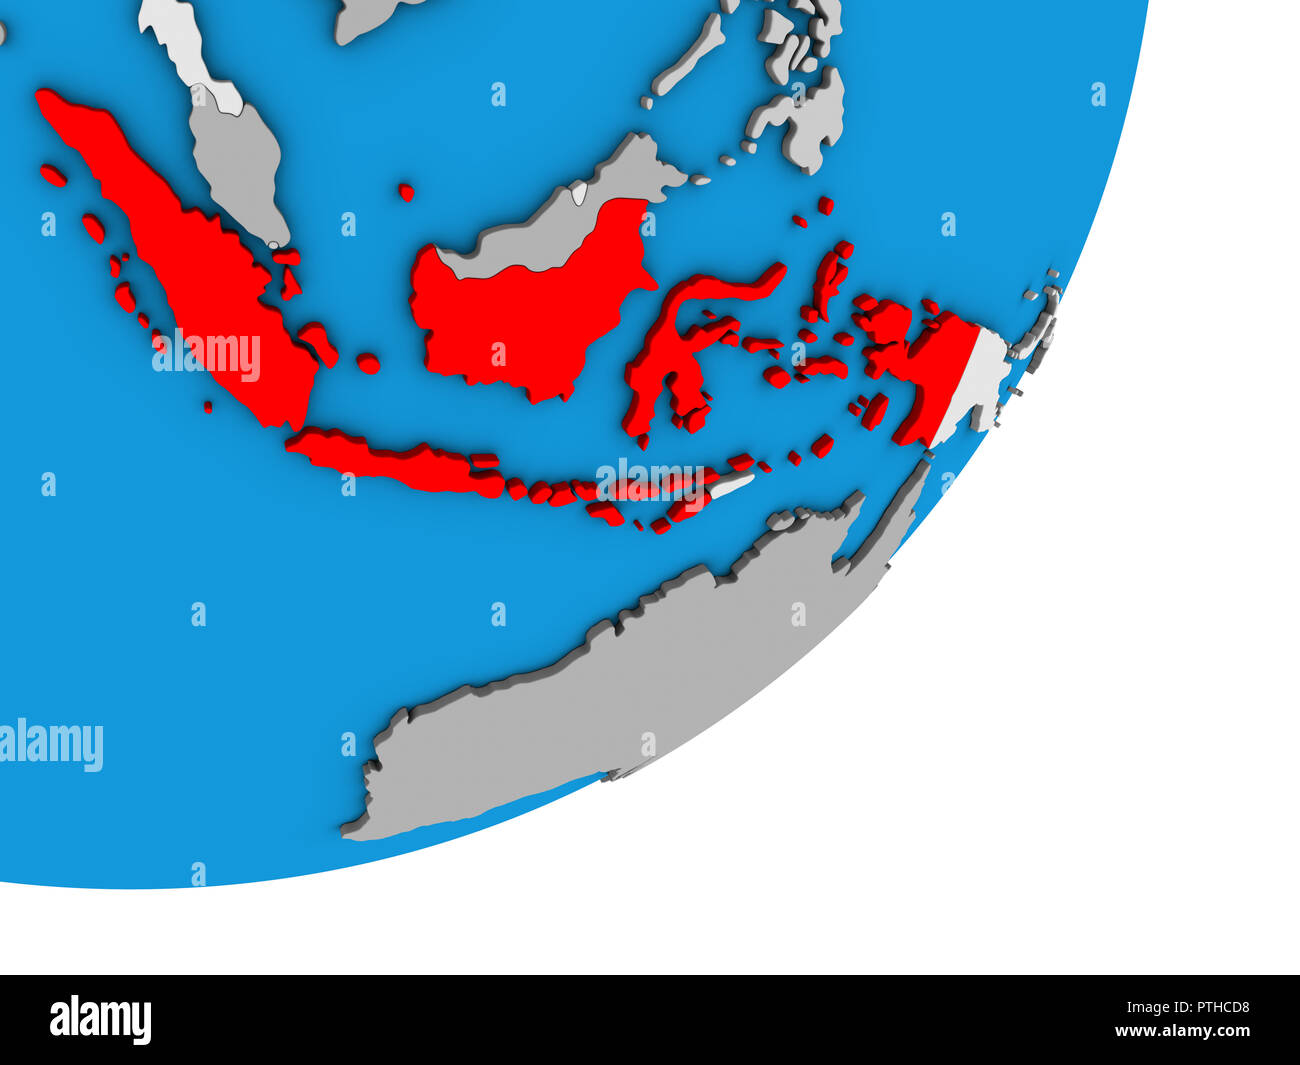 Indonesia on blue political 3D globe. 3D illustration. Stock Photo